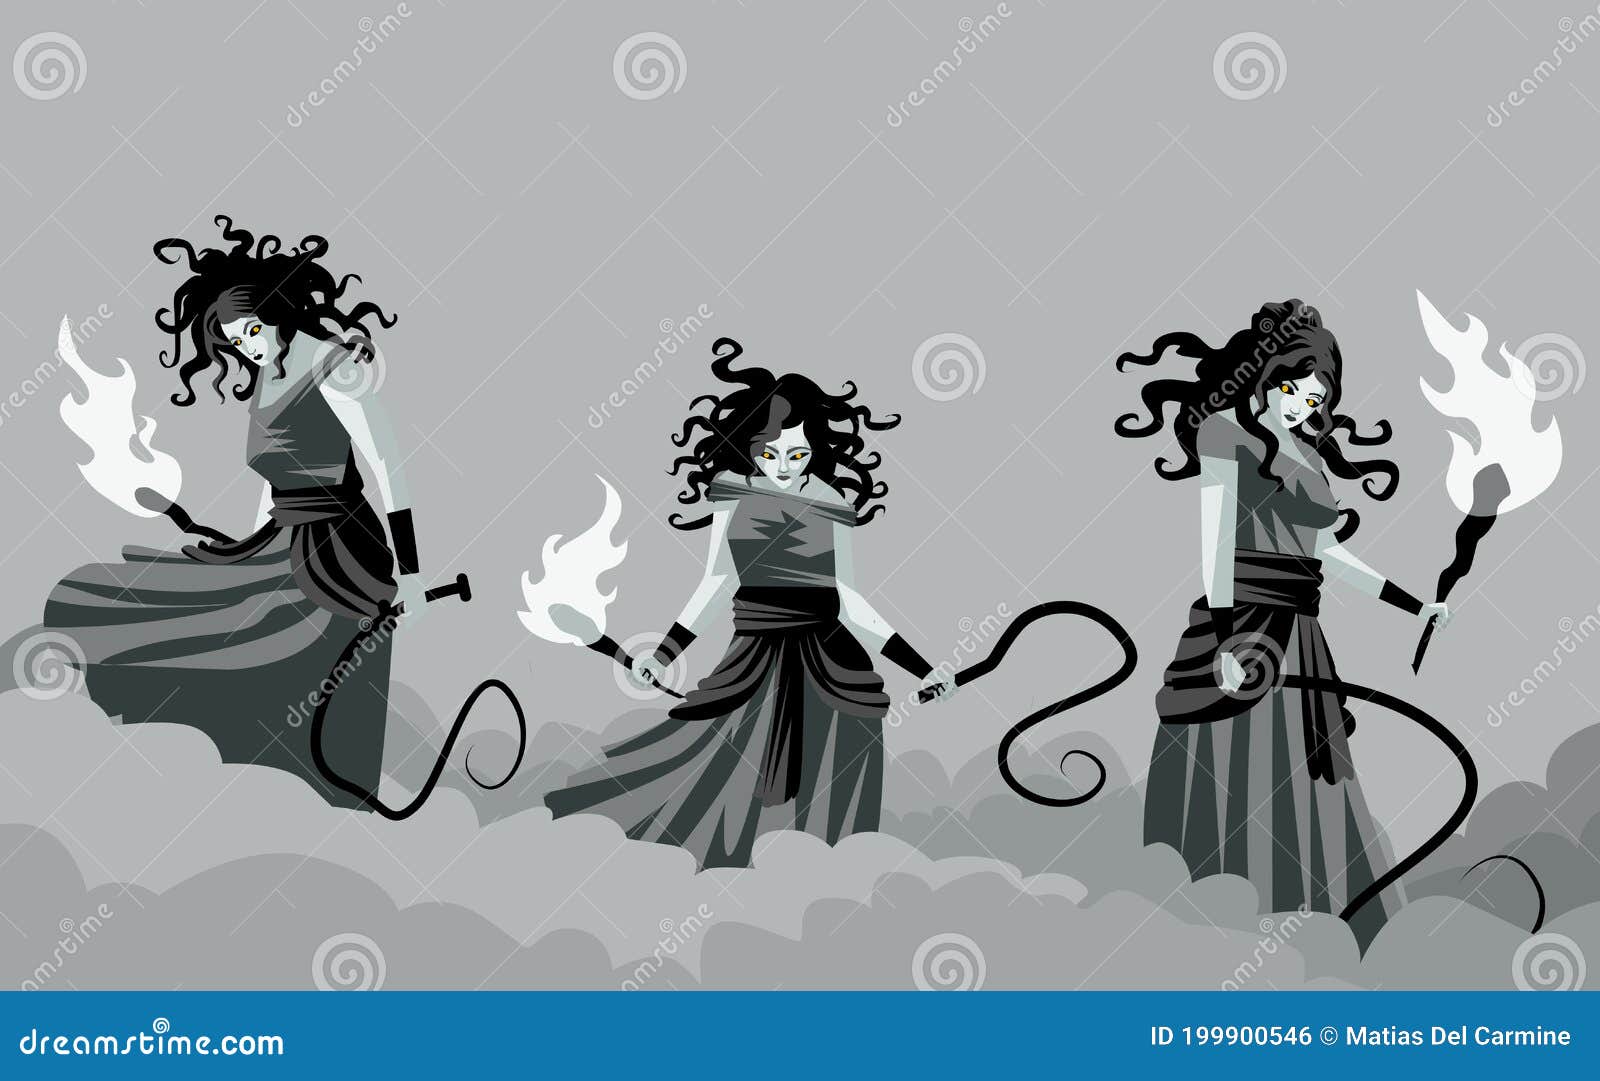 erinyes furies greek mythology goddesses of vengeance